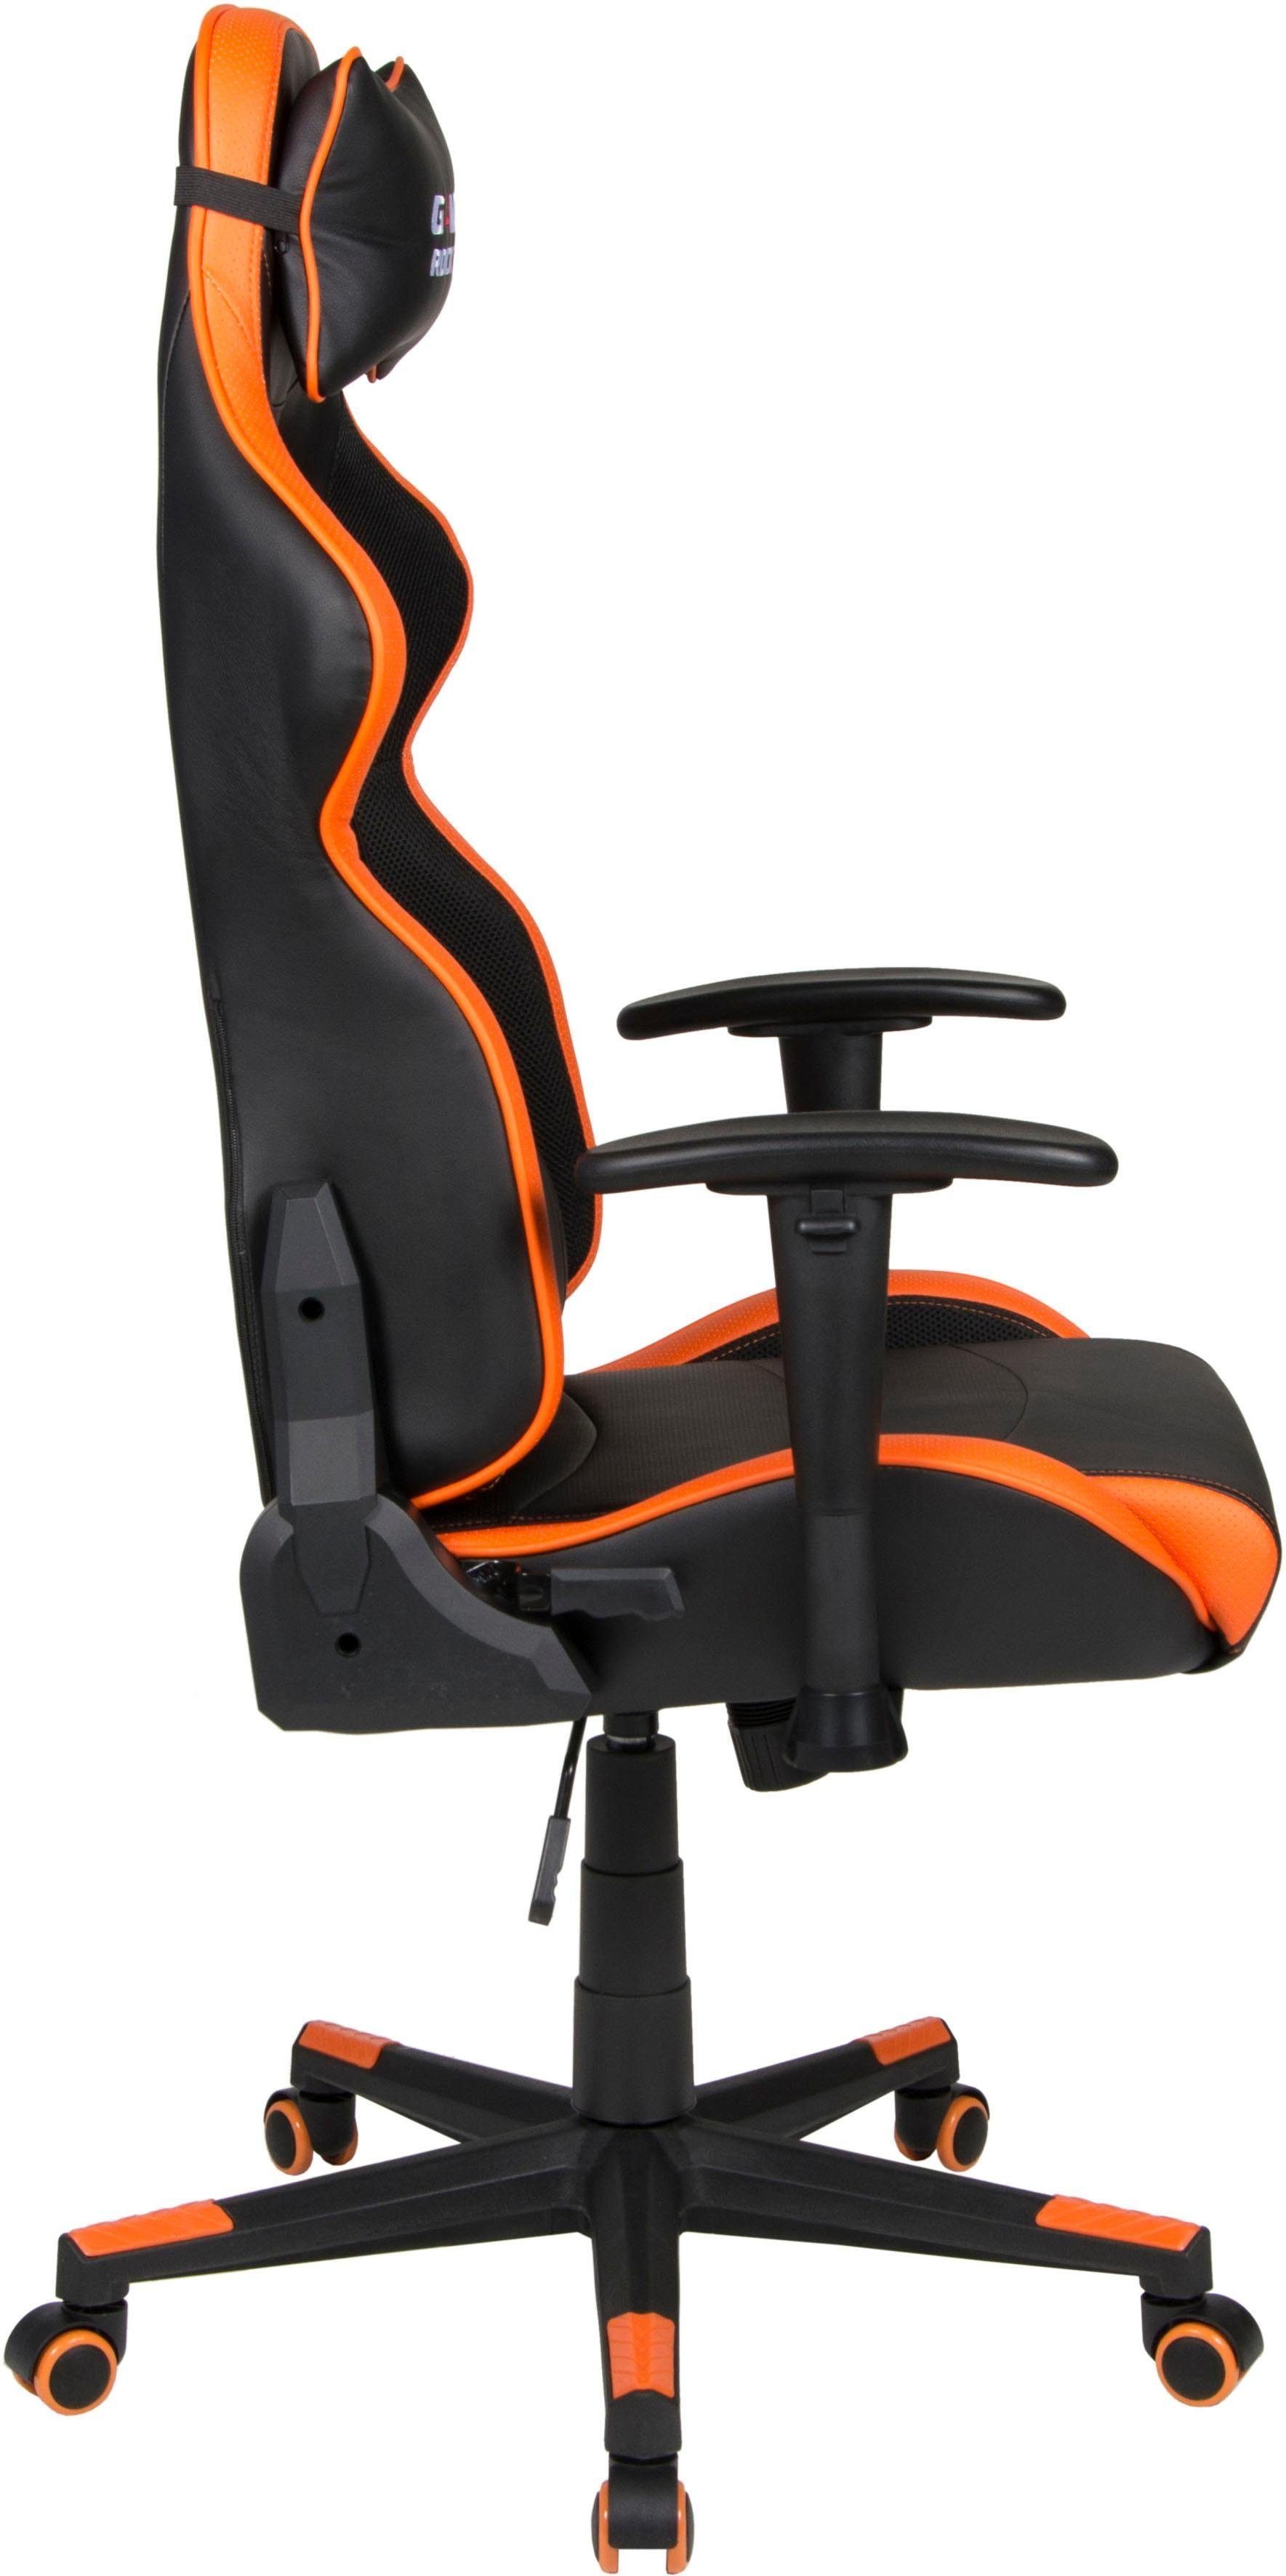 Duo Collection Gaming-Stuhl | G-10 Game-Rocker schwarz/orange schwarz/orange